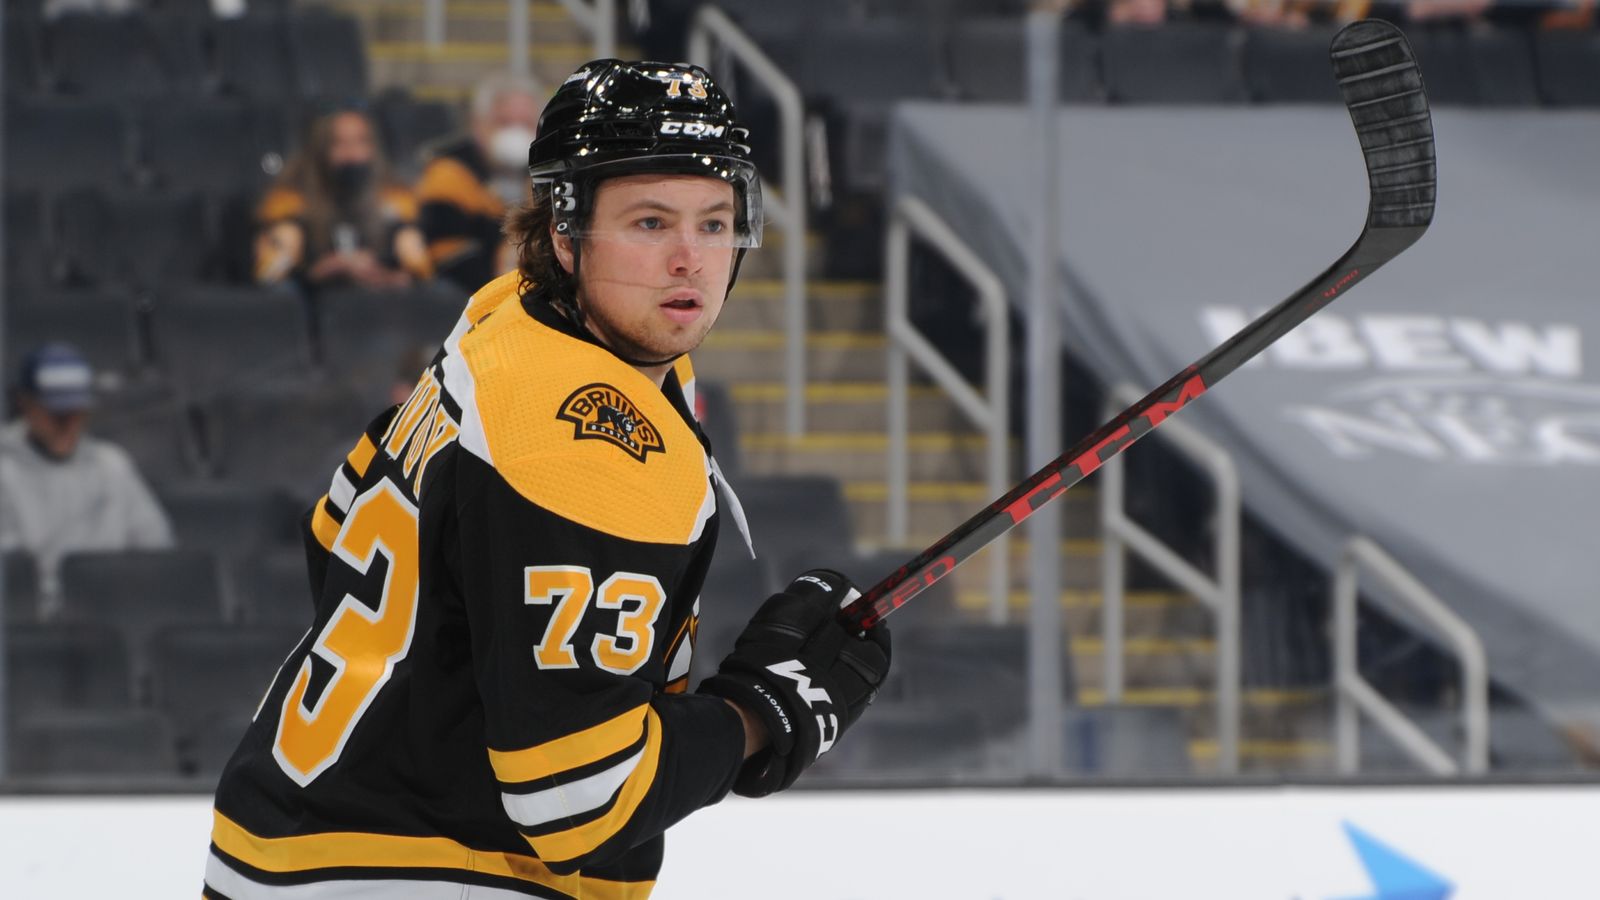 Boston Bruins: No Goals, But Charlie McAvoy Makes Impact on Defense